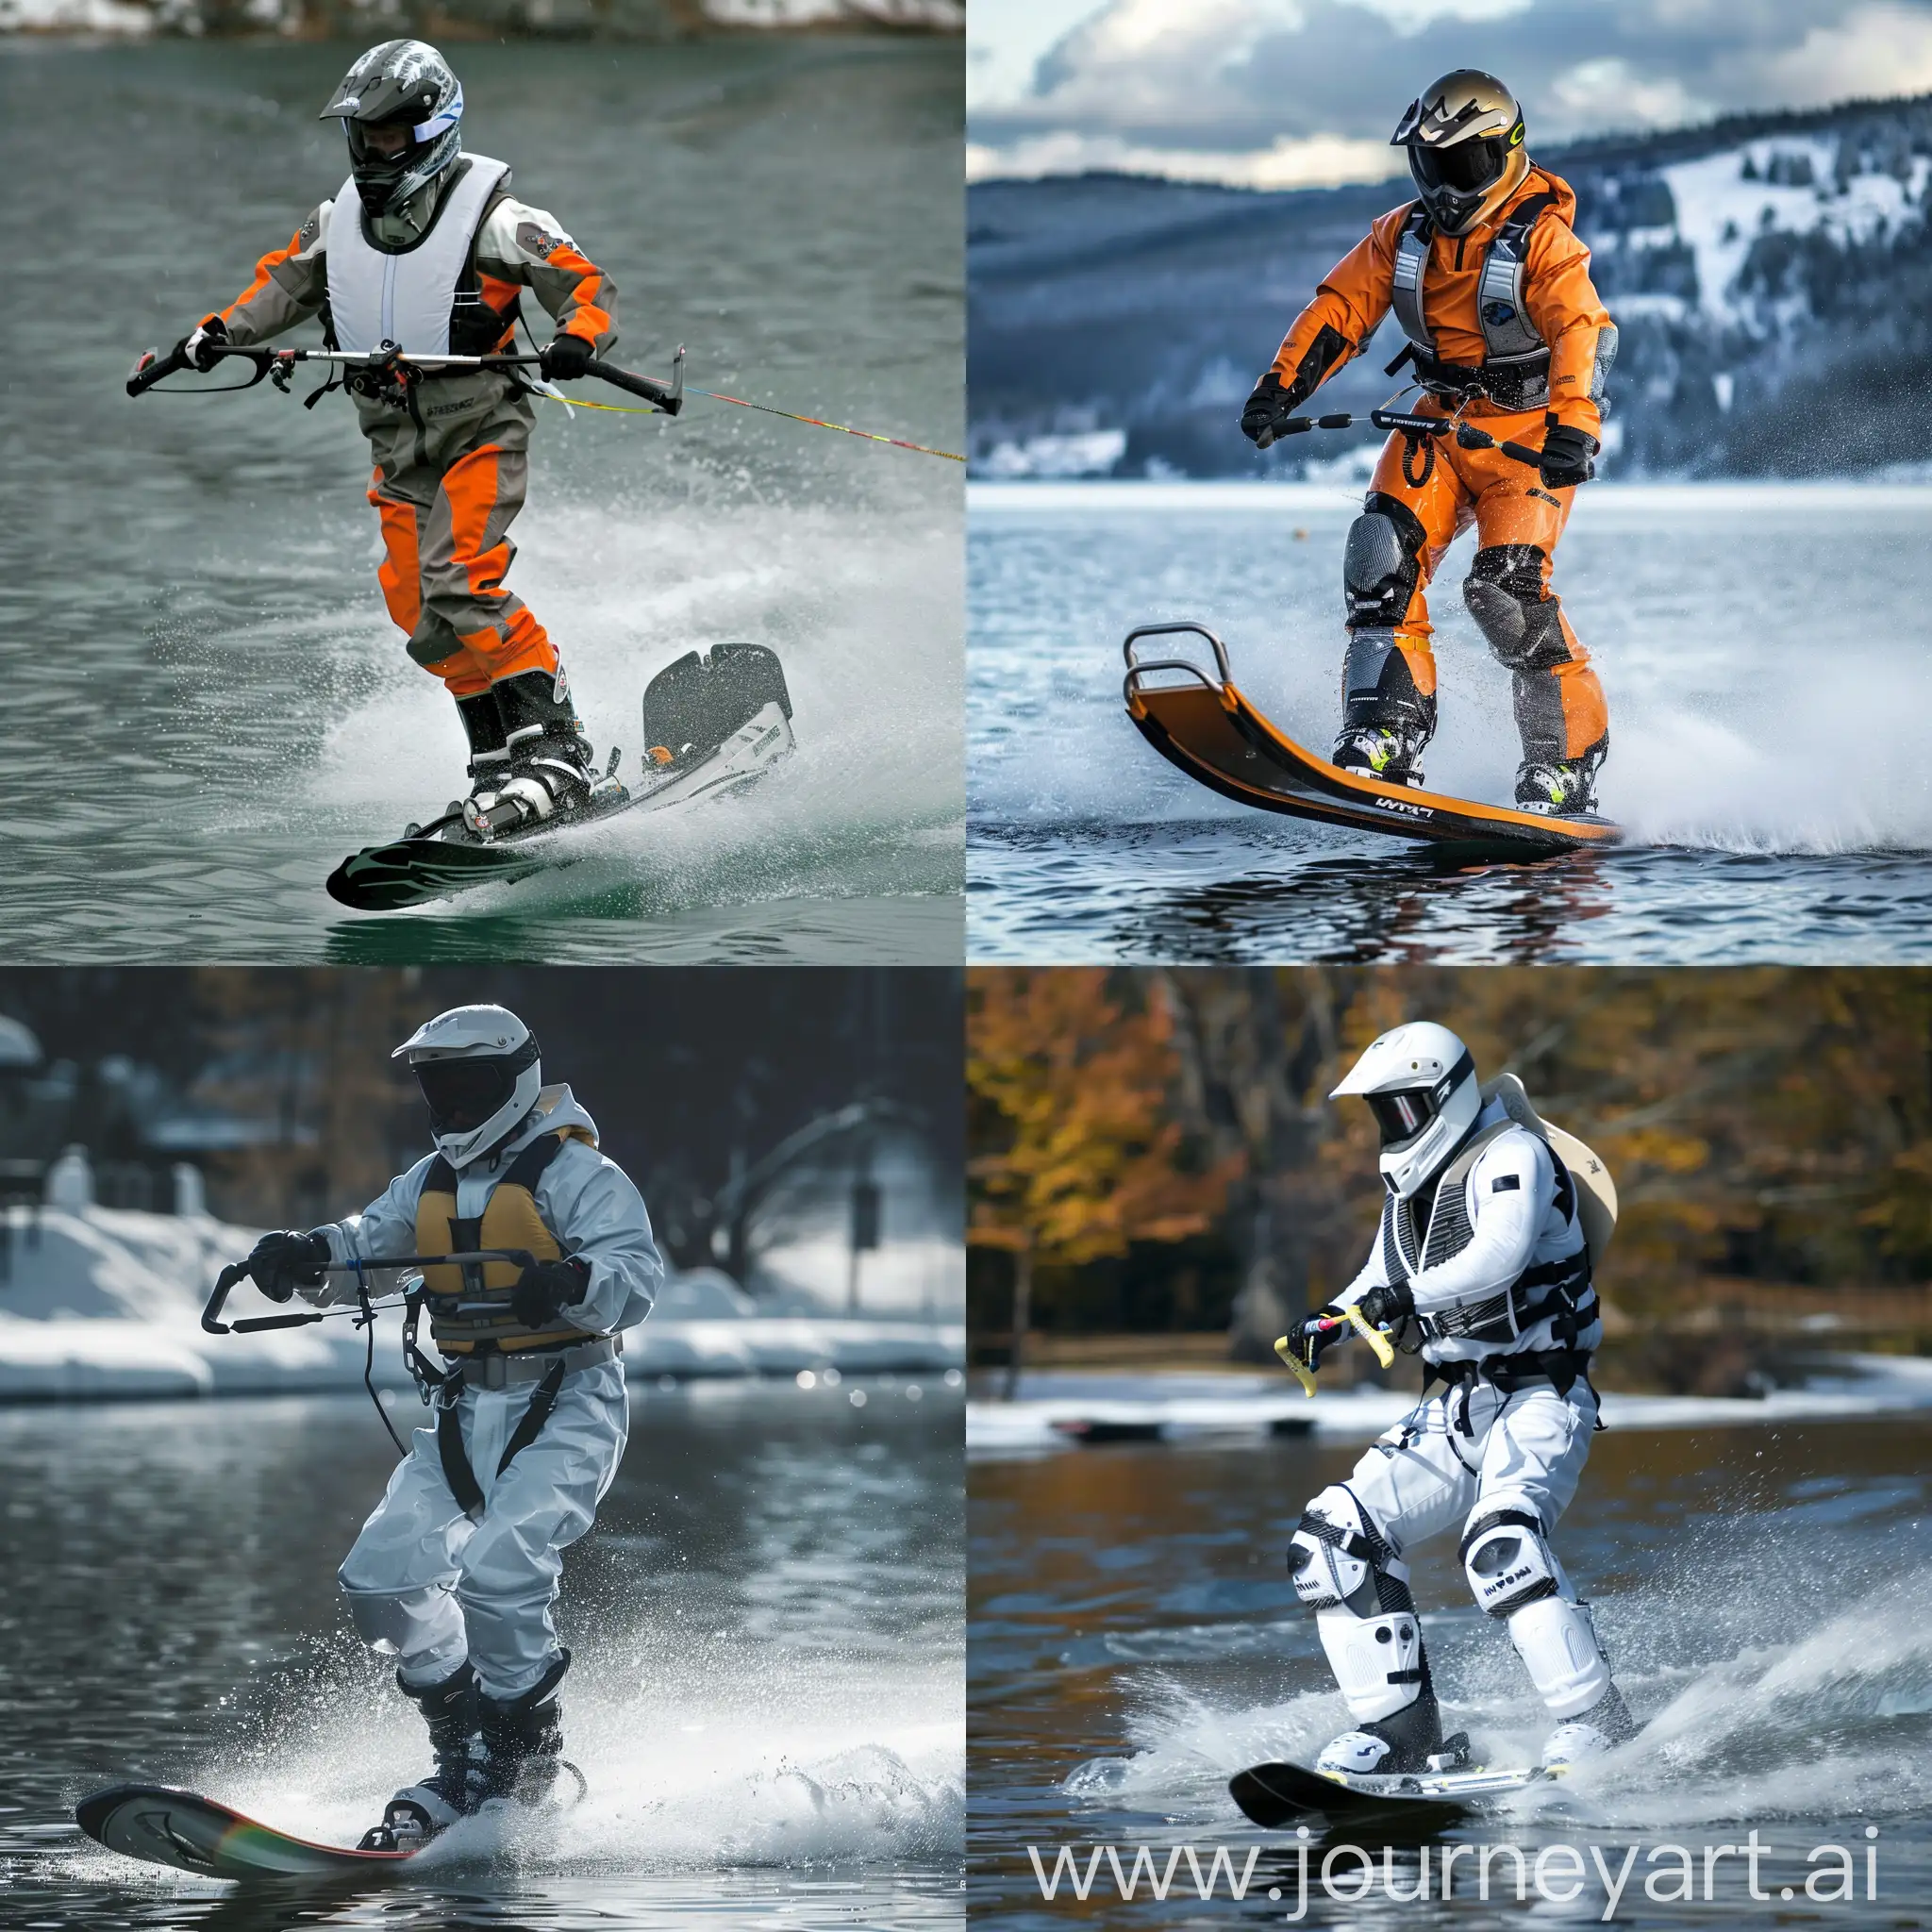 waterskiing in a snomobile suit